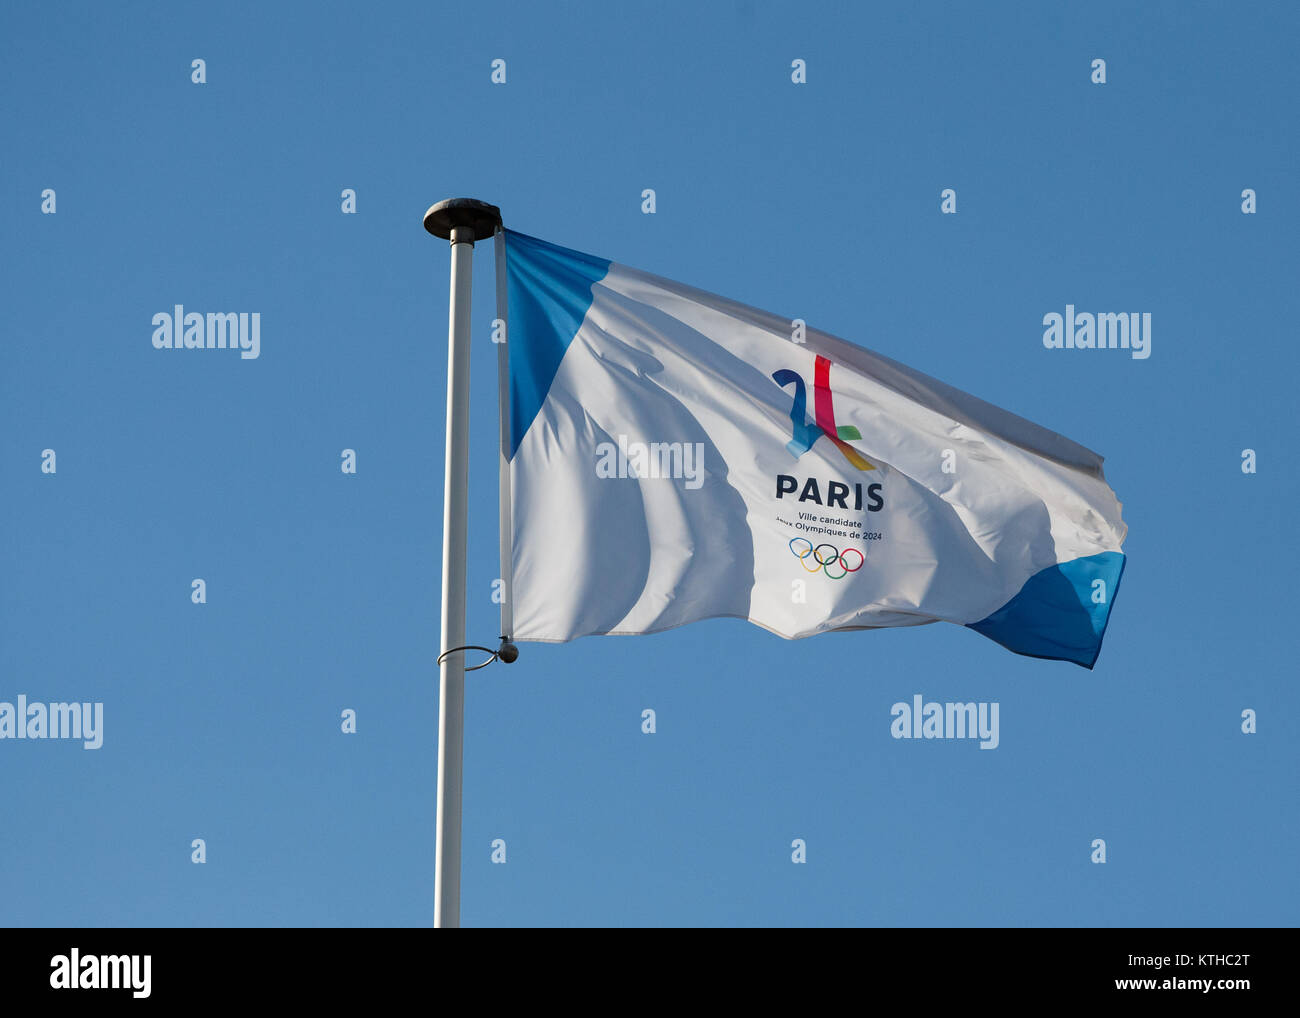 Bandiera del candidato olimpico Parigi 2024 Foto Stock